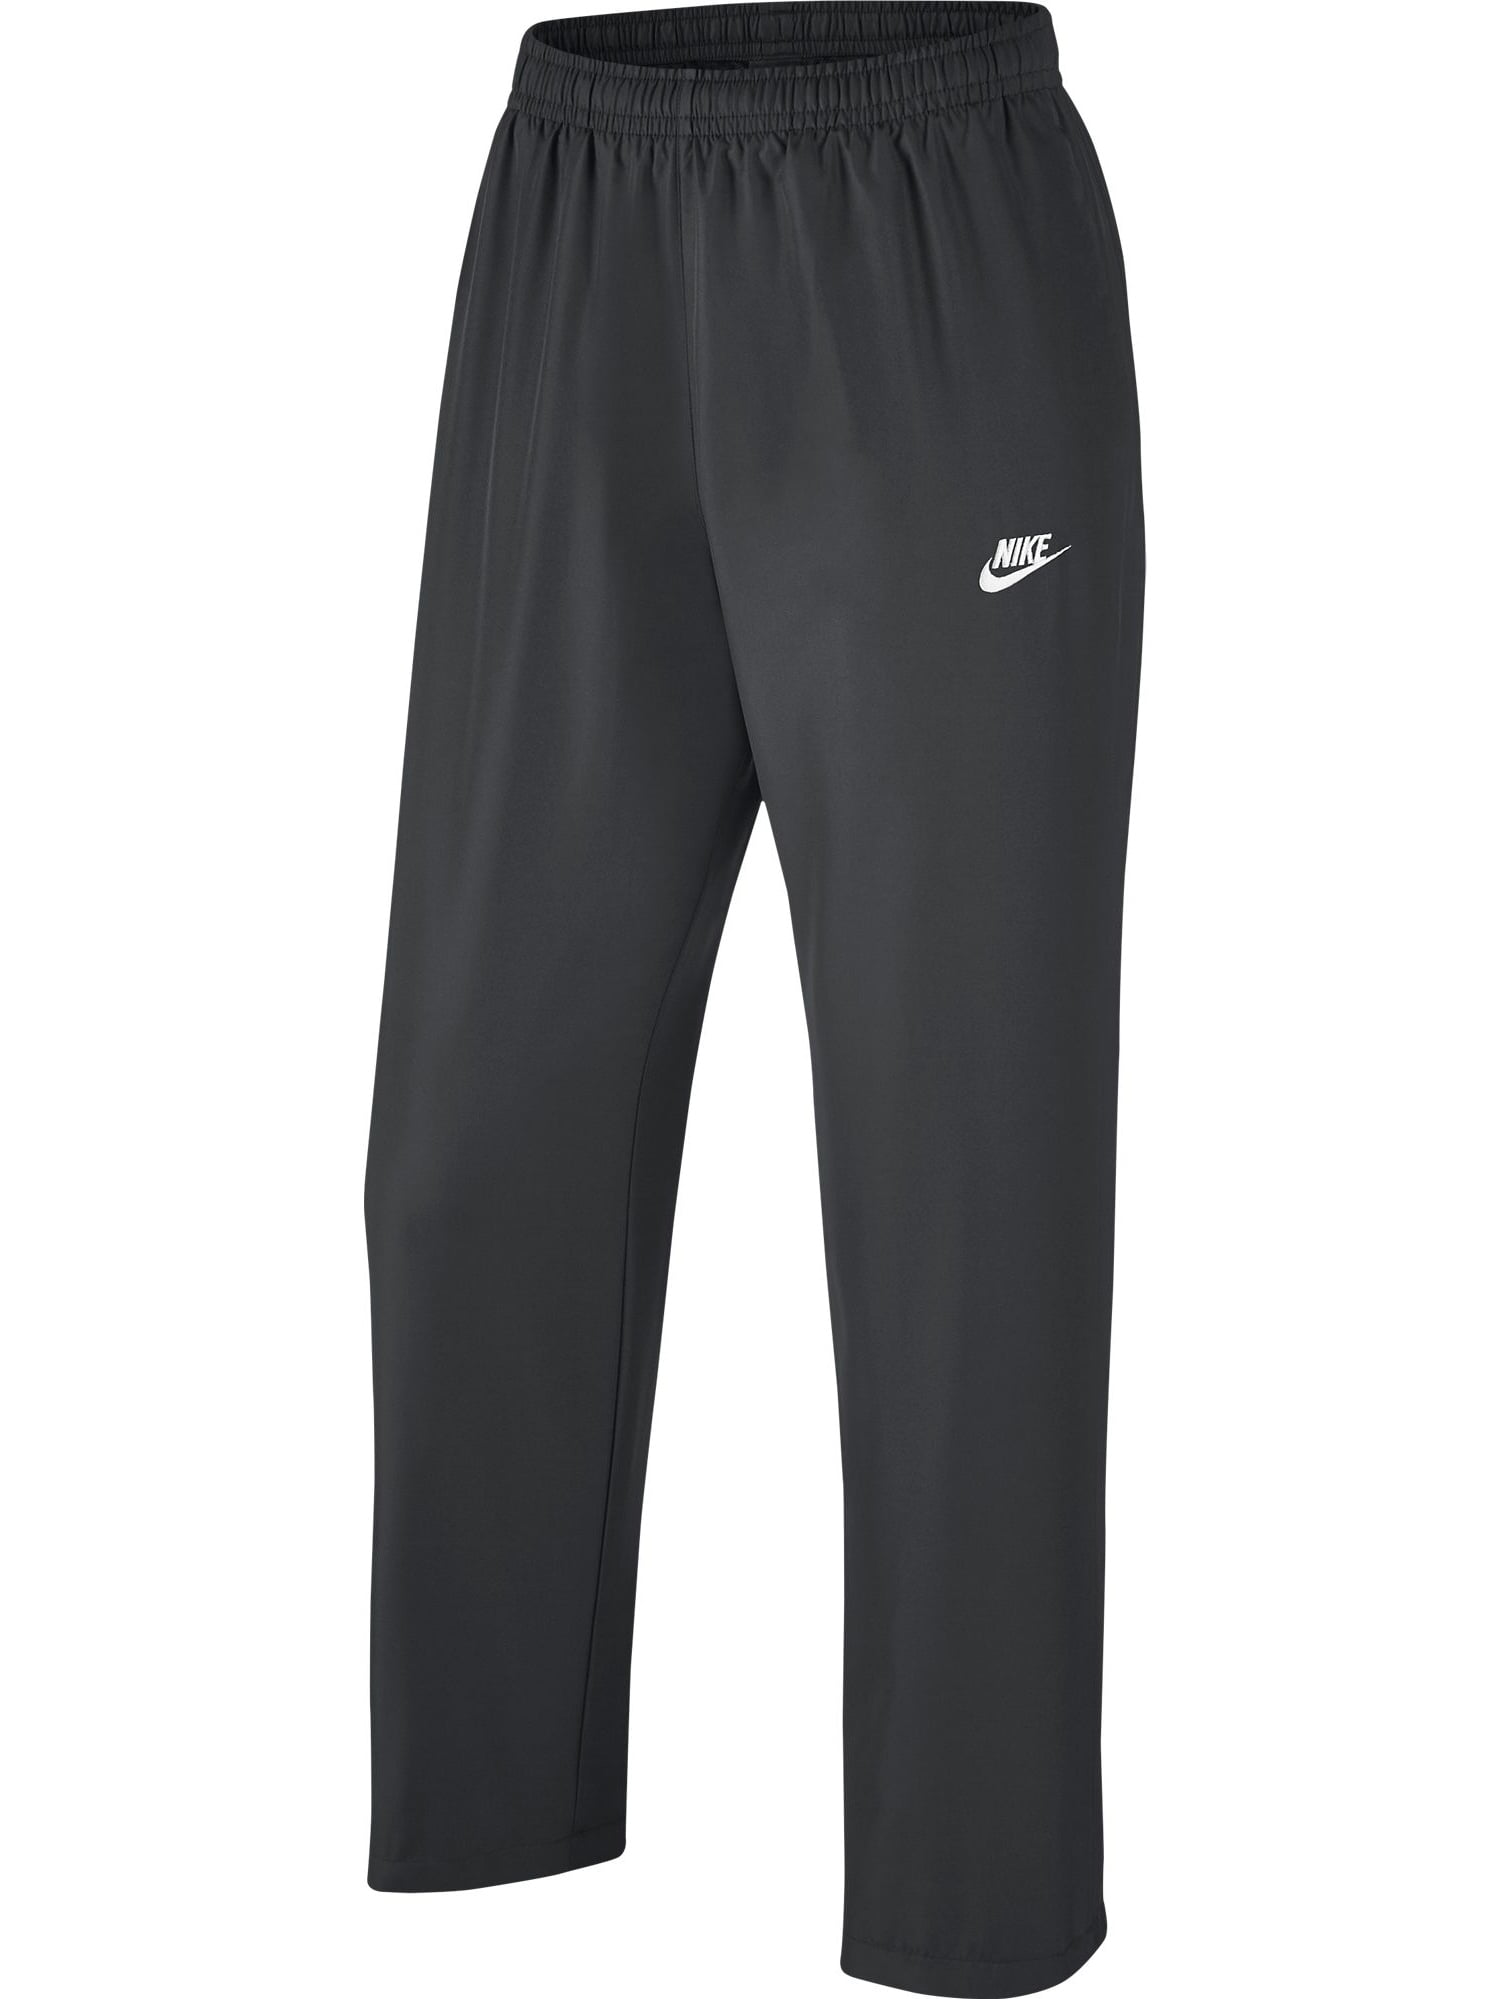 Nike Men's Sportswear Pants Anthracite/White 804314-060 - Walmart.com